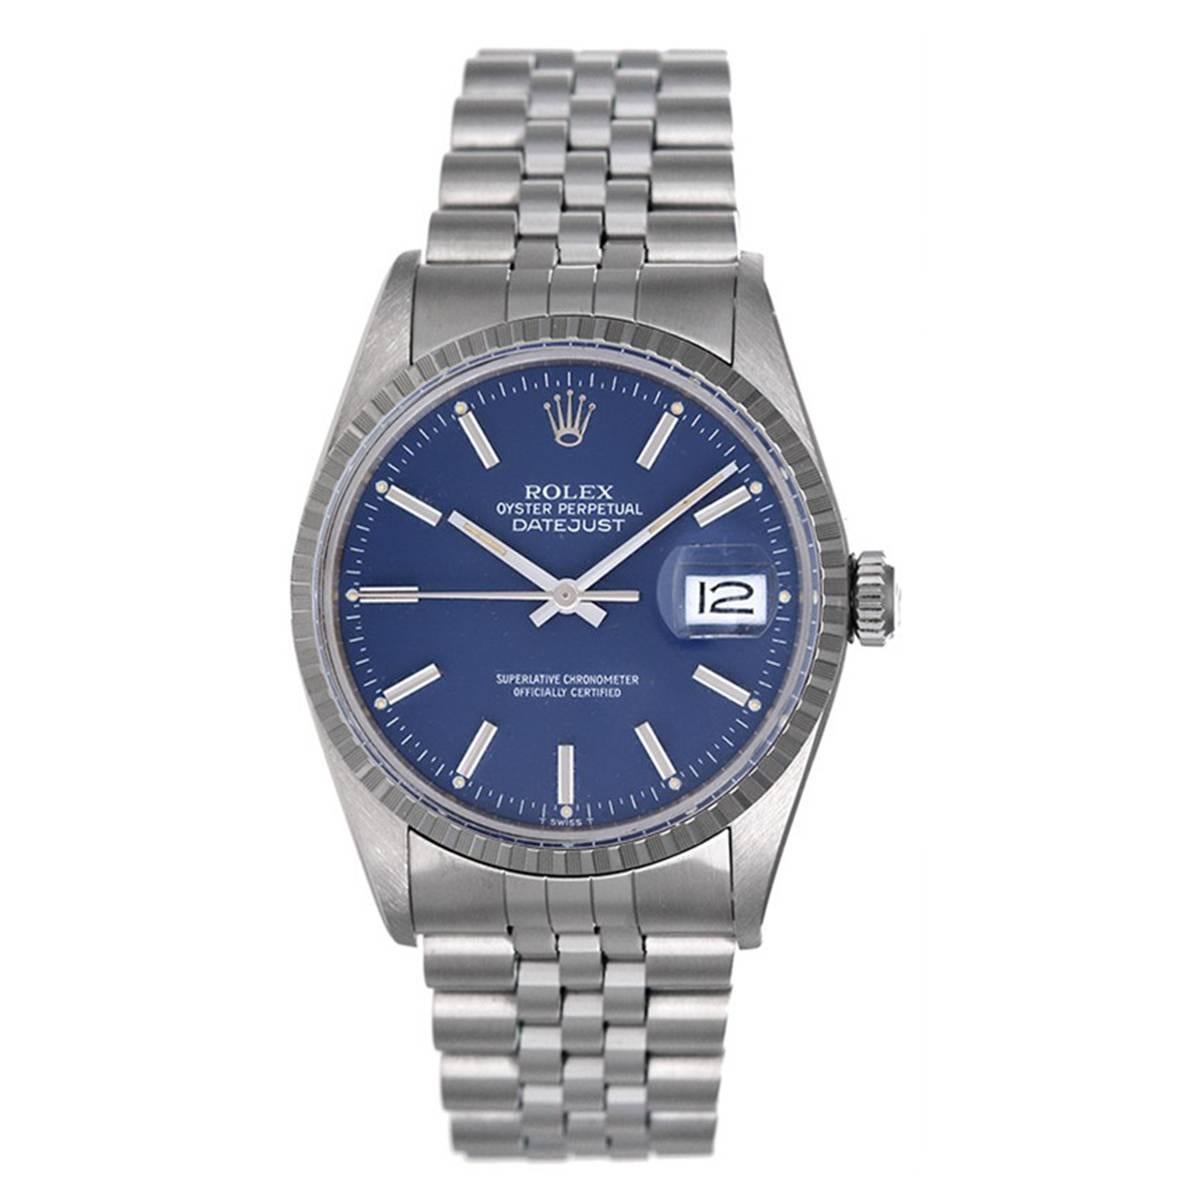 Rolex Stainless Steel Datejust Automatic Wristwatch Ref 16030